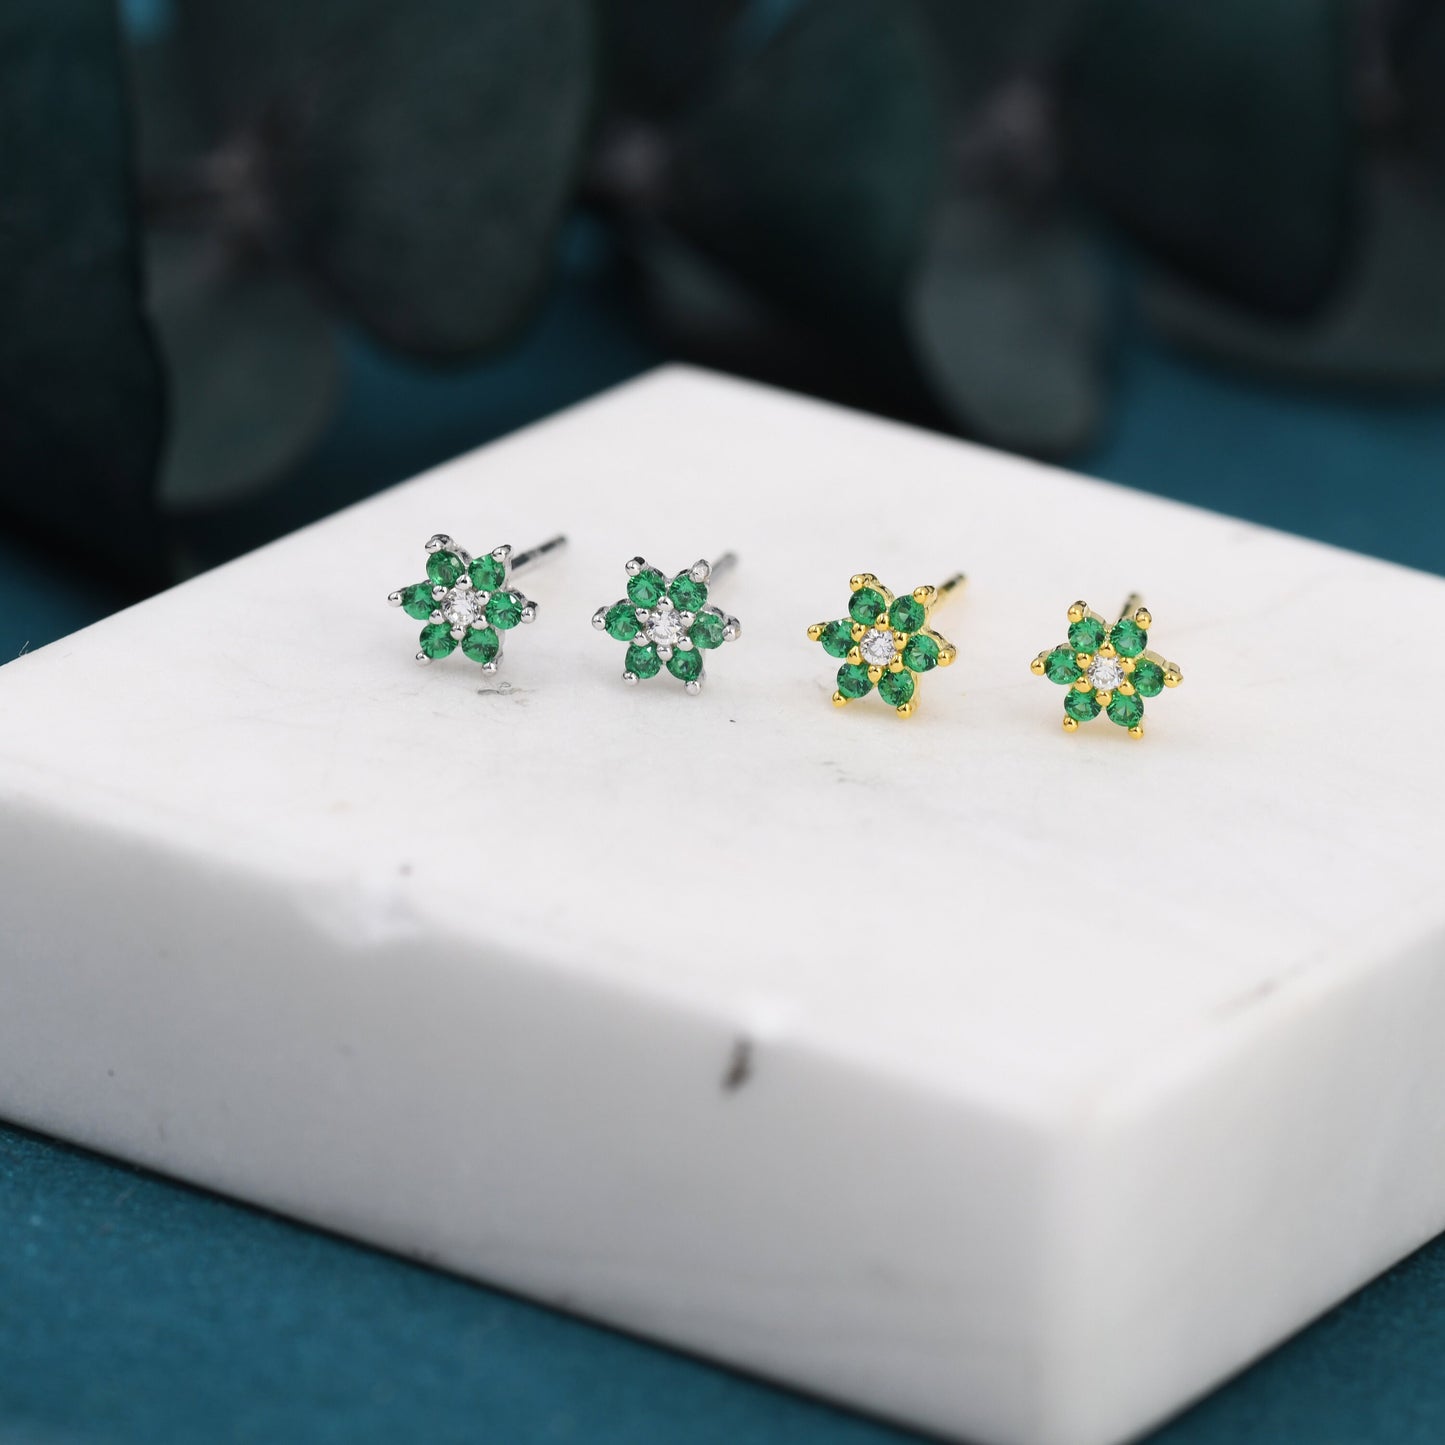 Very Tiny Emerald Green CZ Flower Stud Earrings in Sterling Silver, Silver or Gold, Crystal Flower Earrings, Stacking Earrings